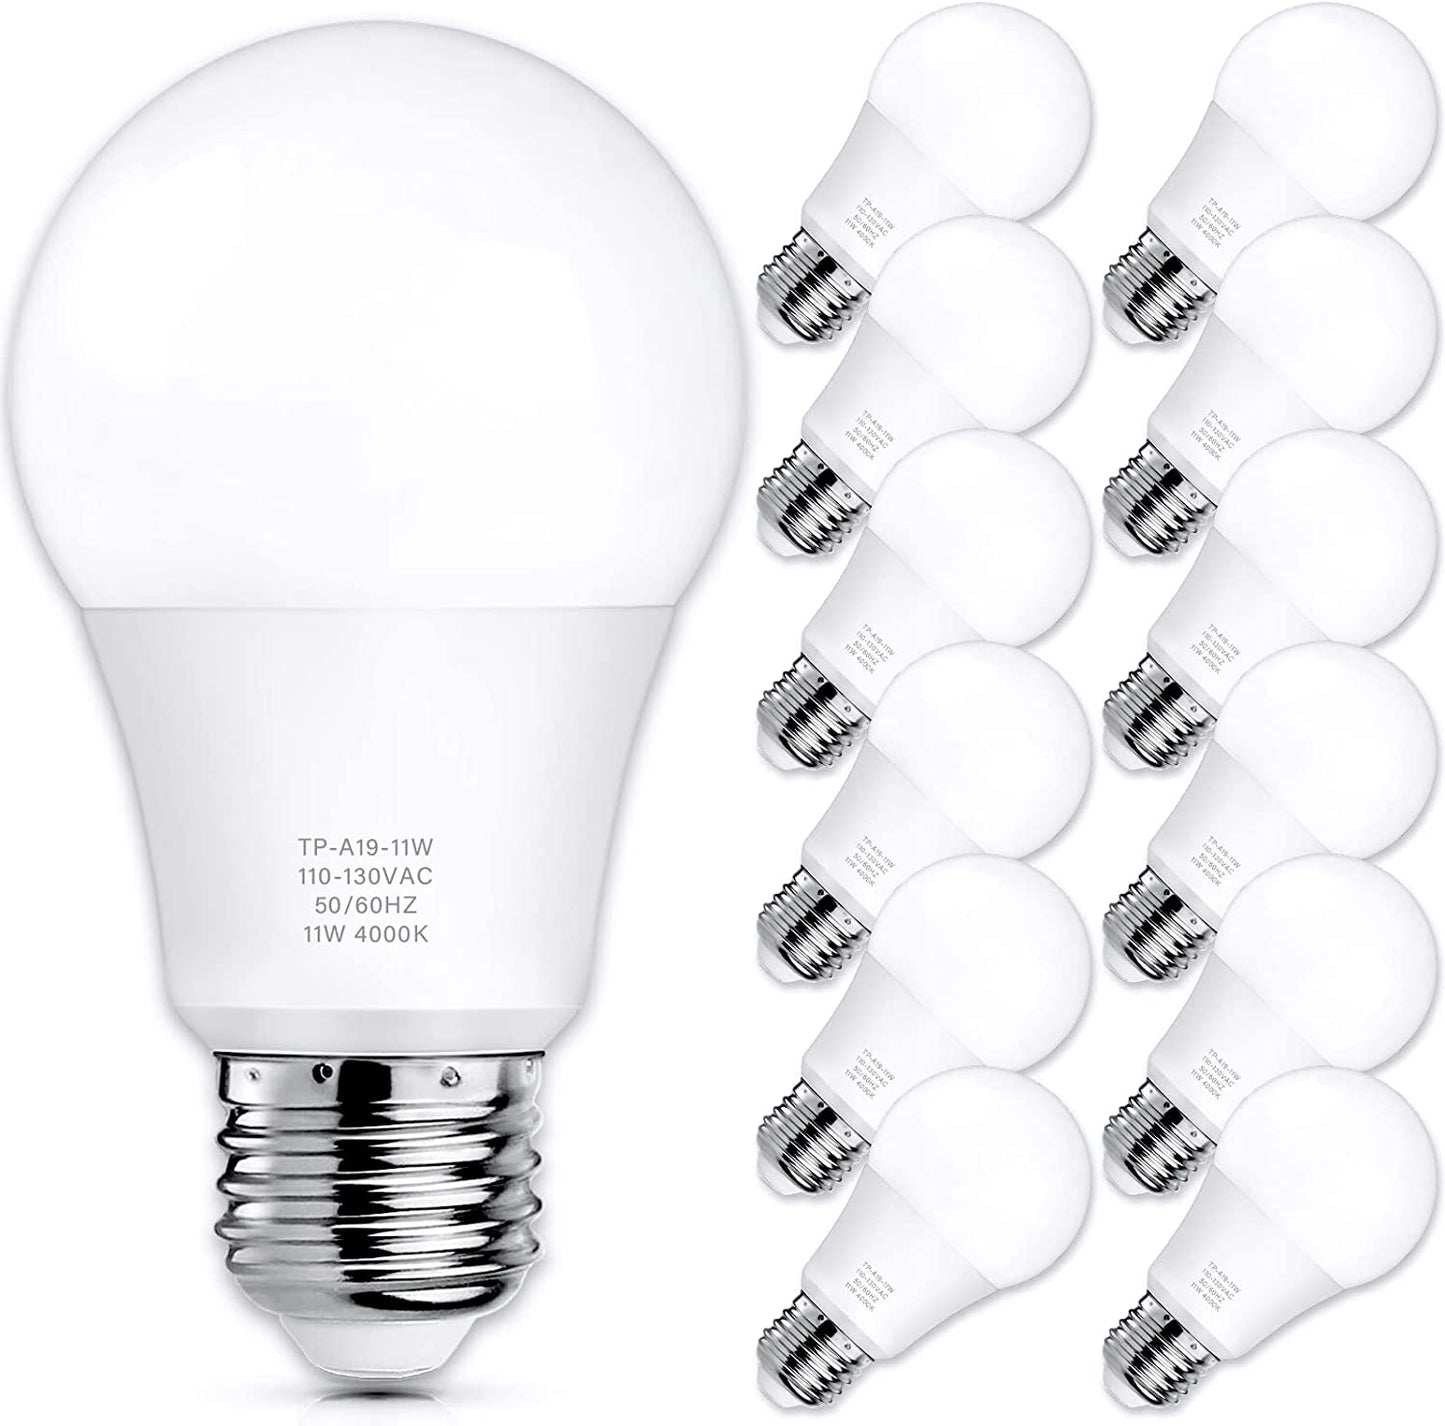 A19 LED Light Bulbs, 100 Watt Equivalent LED Bulbs, 5000K Daylight White, 1100 Lumens, Standard E26 Medium Screw Base, CRI 85+, 25000+ Hours Lifespan, No Flicker, Non-Dimmable, Pack of 12